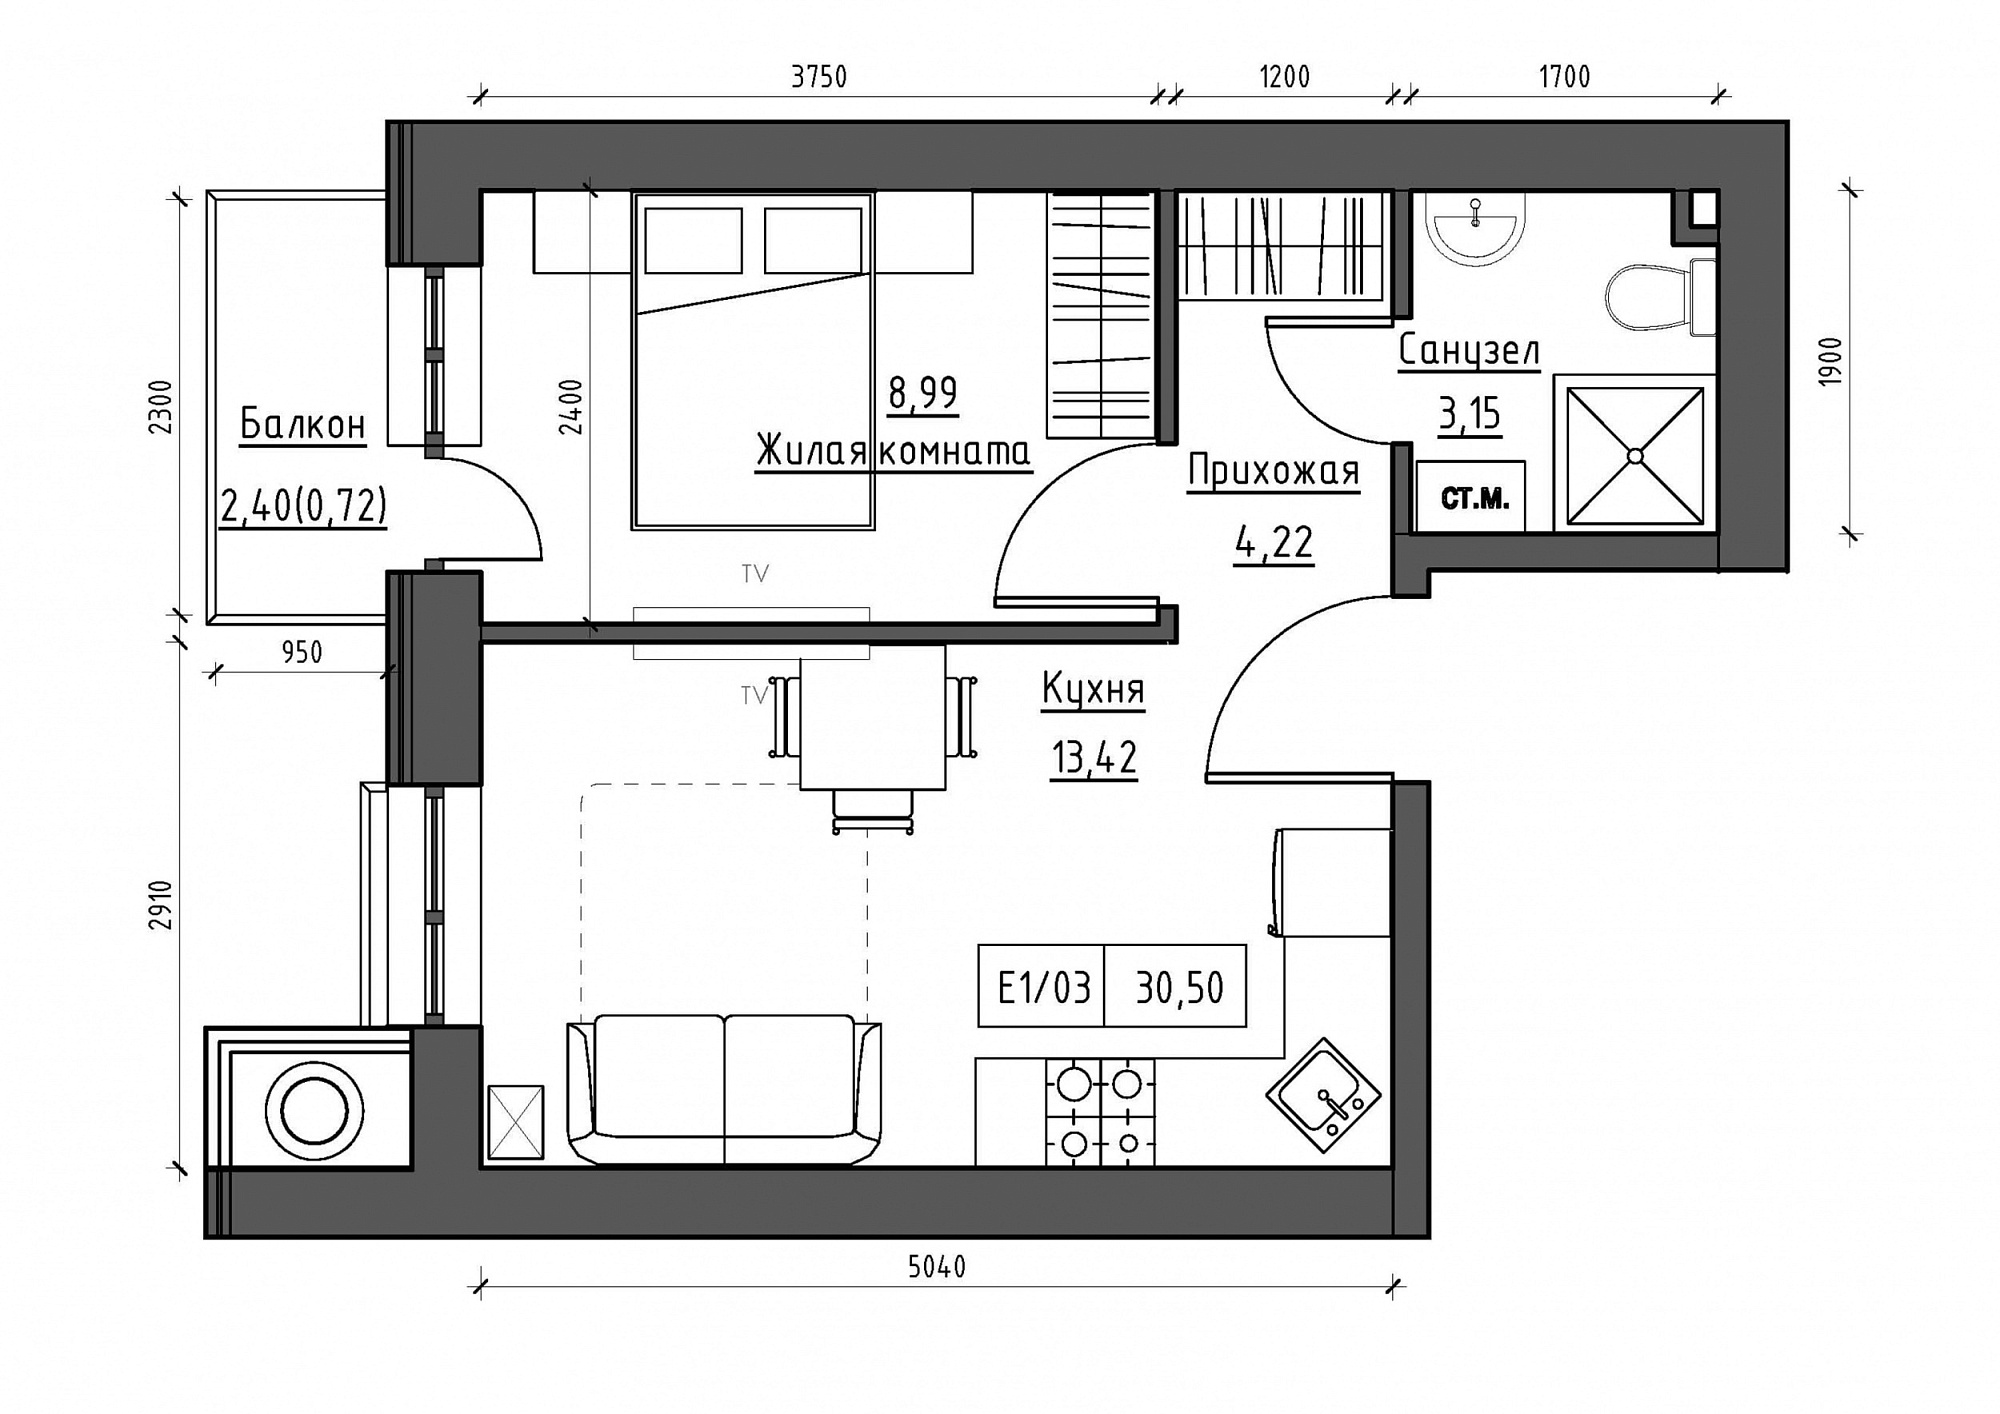 Planning 1-rm flats area 30.5m2, KS-011-02/0003.